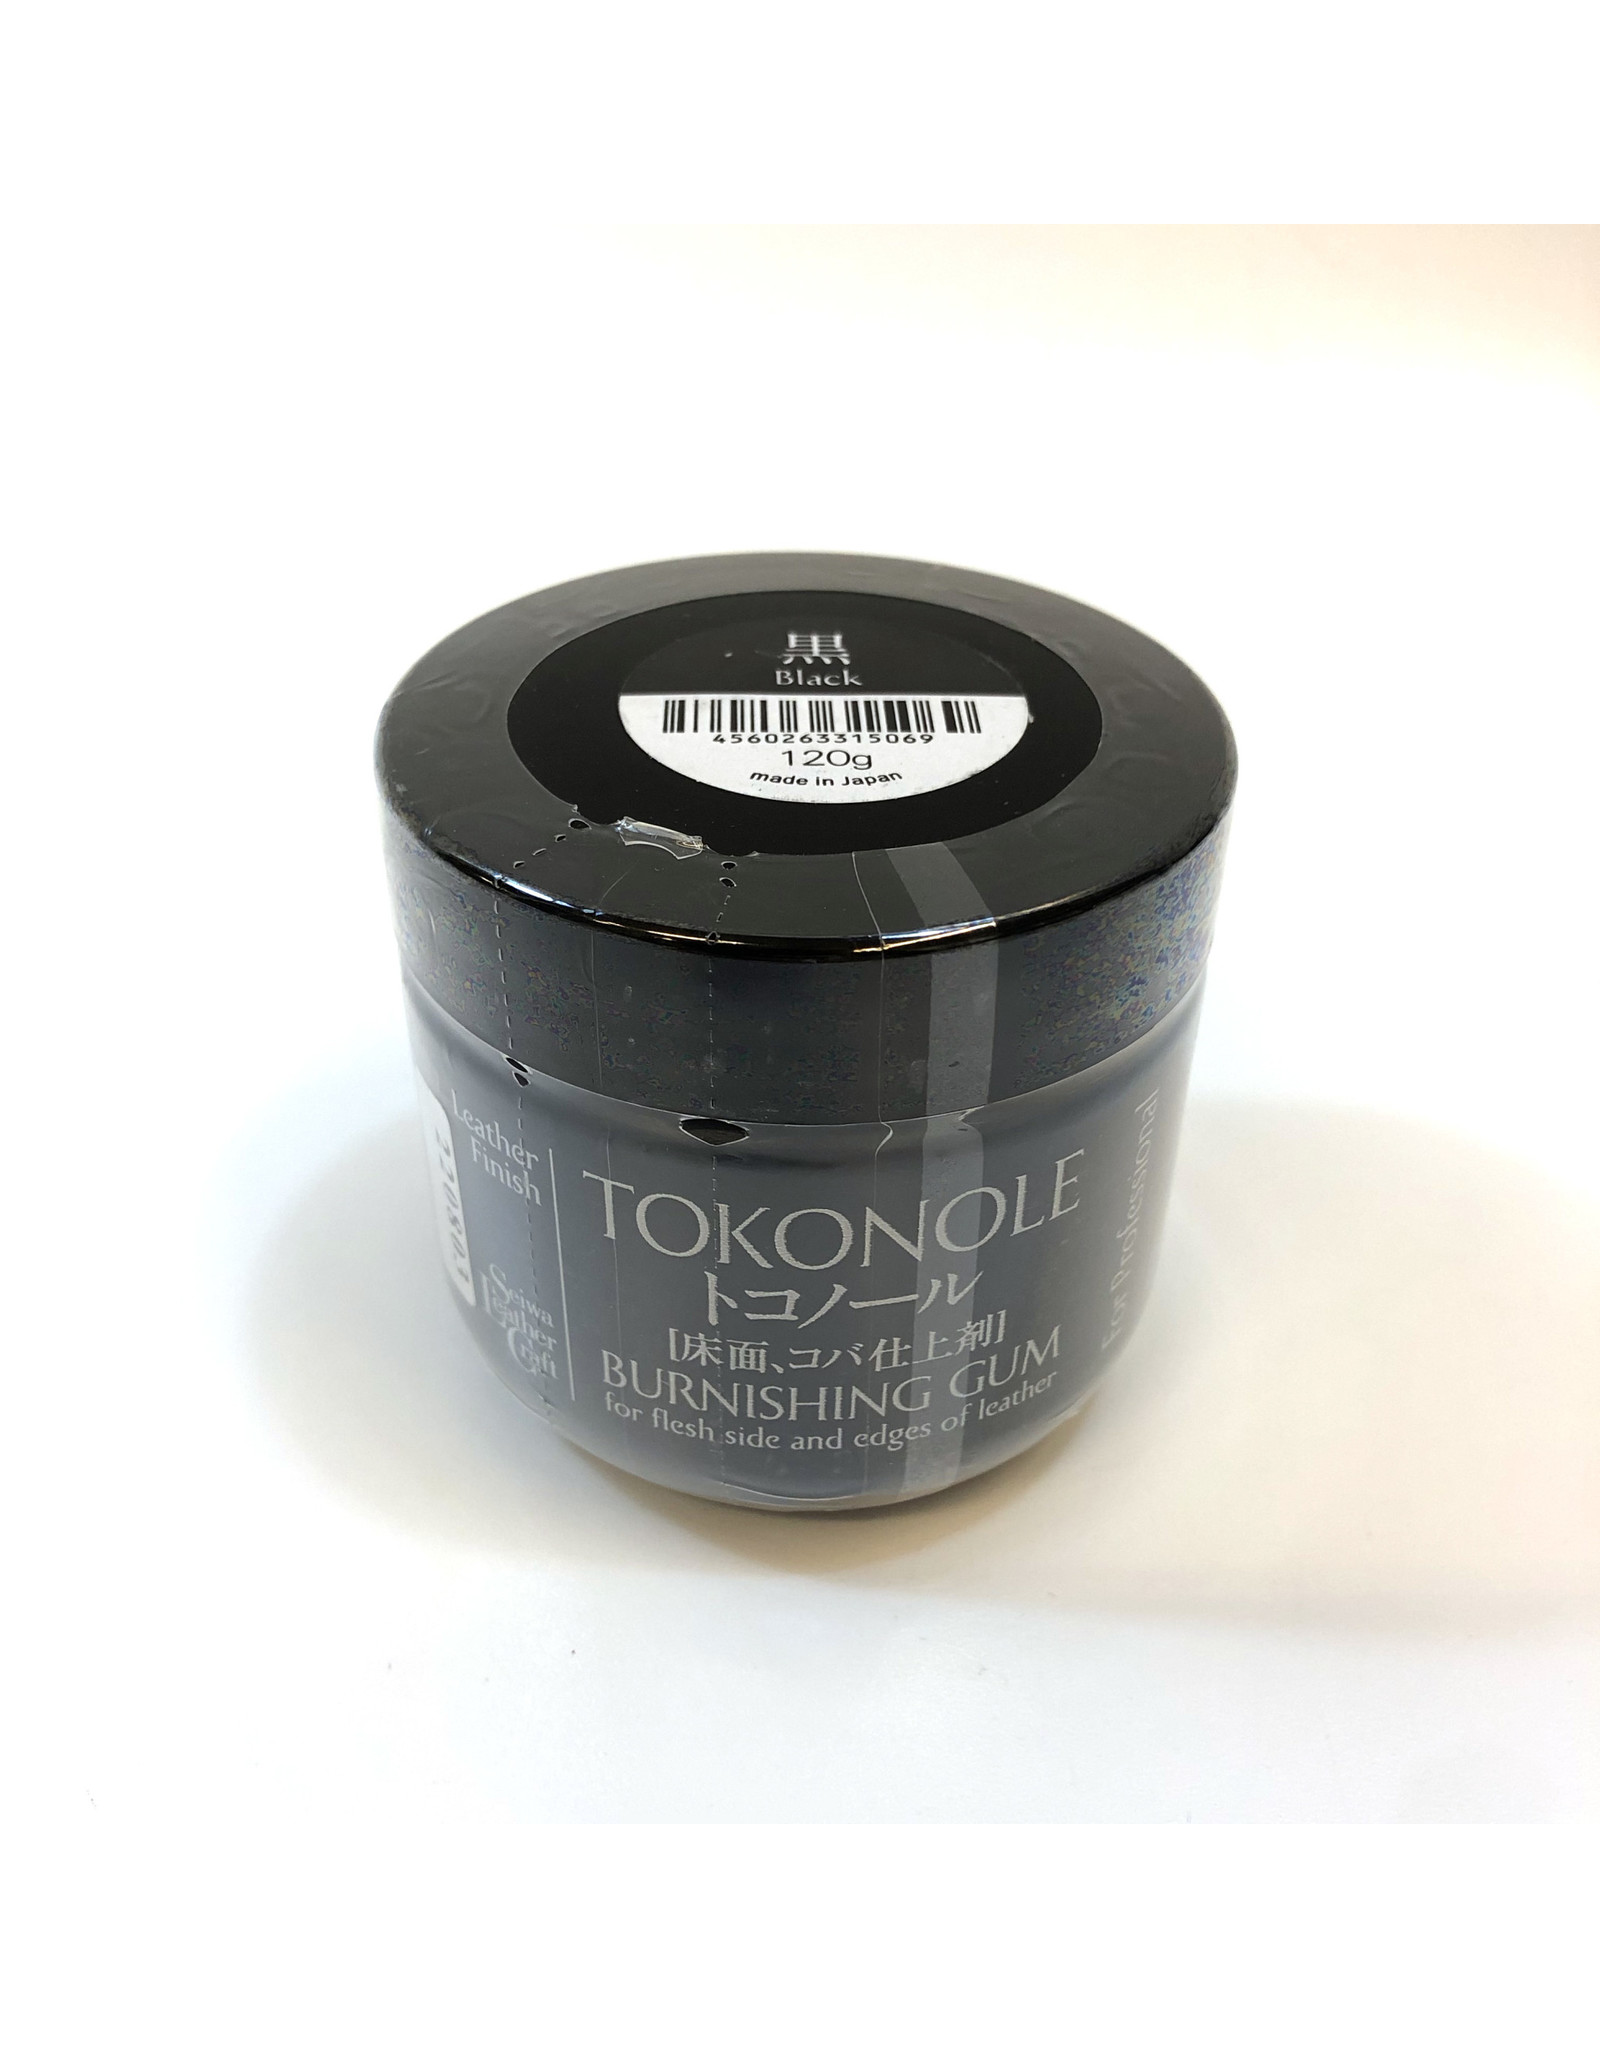 Tokonole black